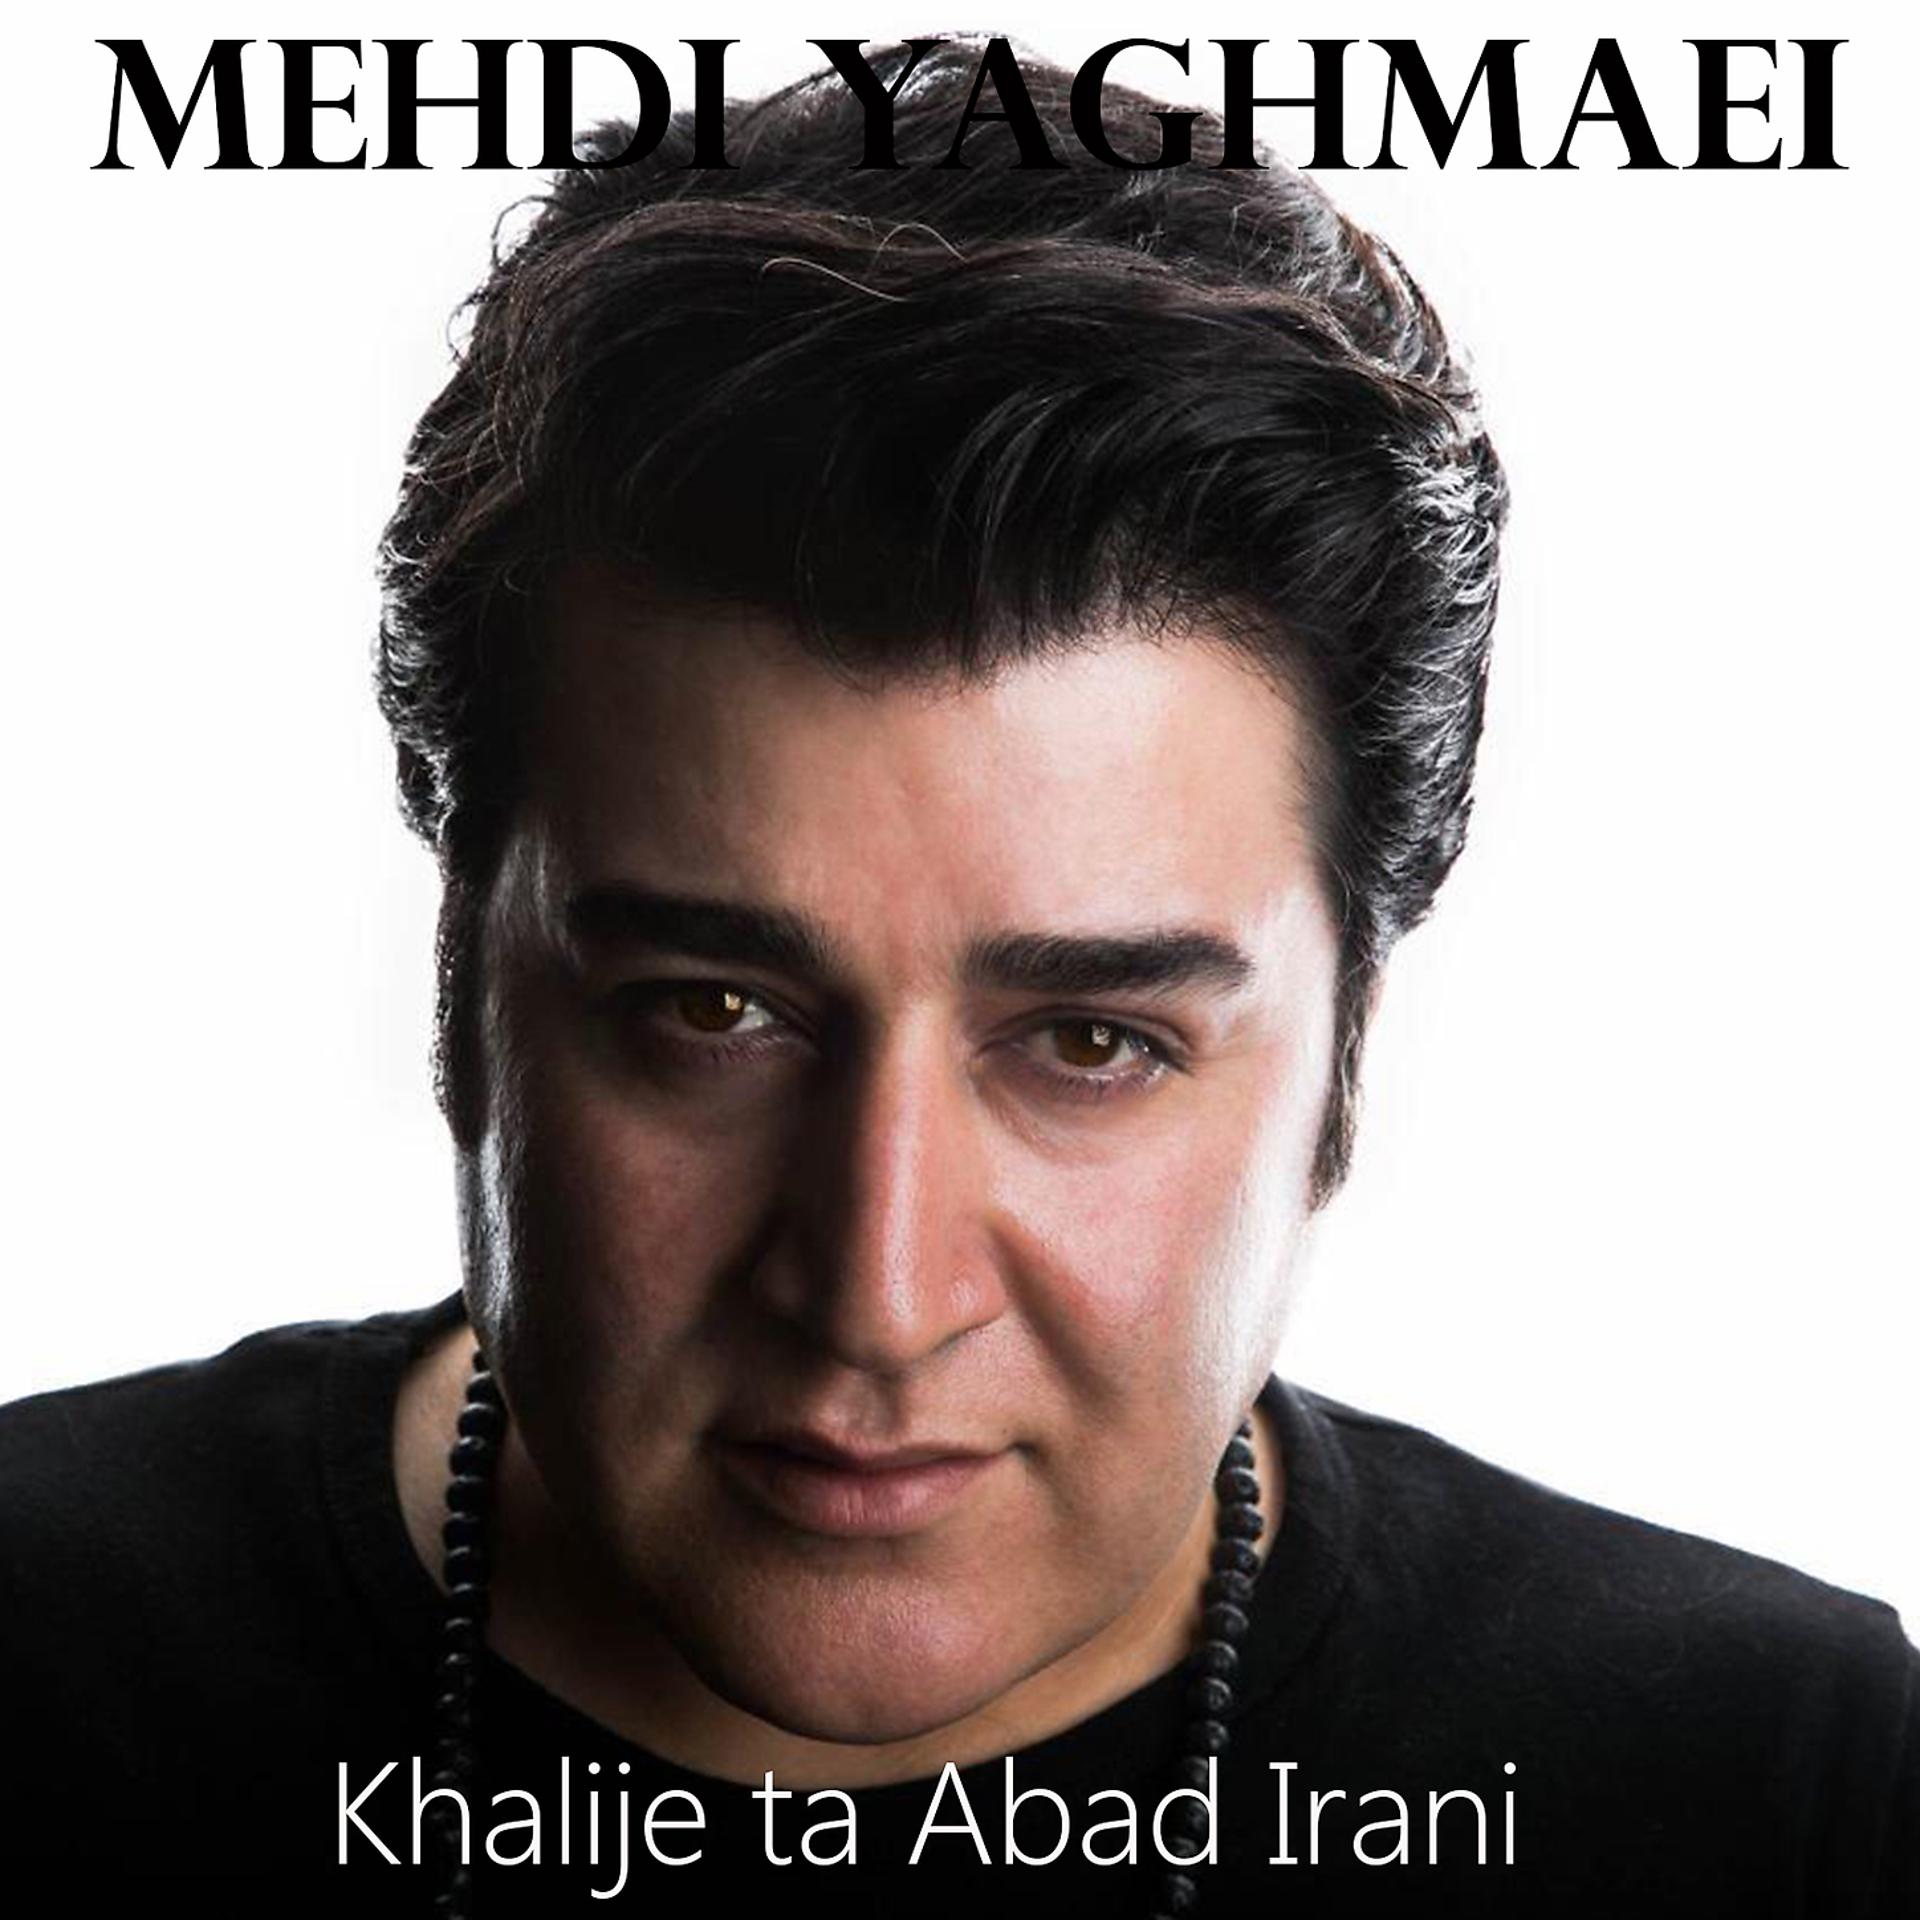 Постер к треку Mehdi Yaghmaei - Khalije Ta Abad Irani